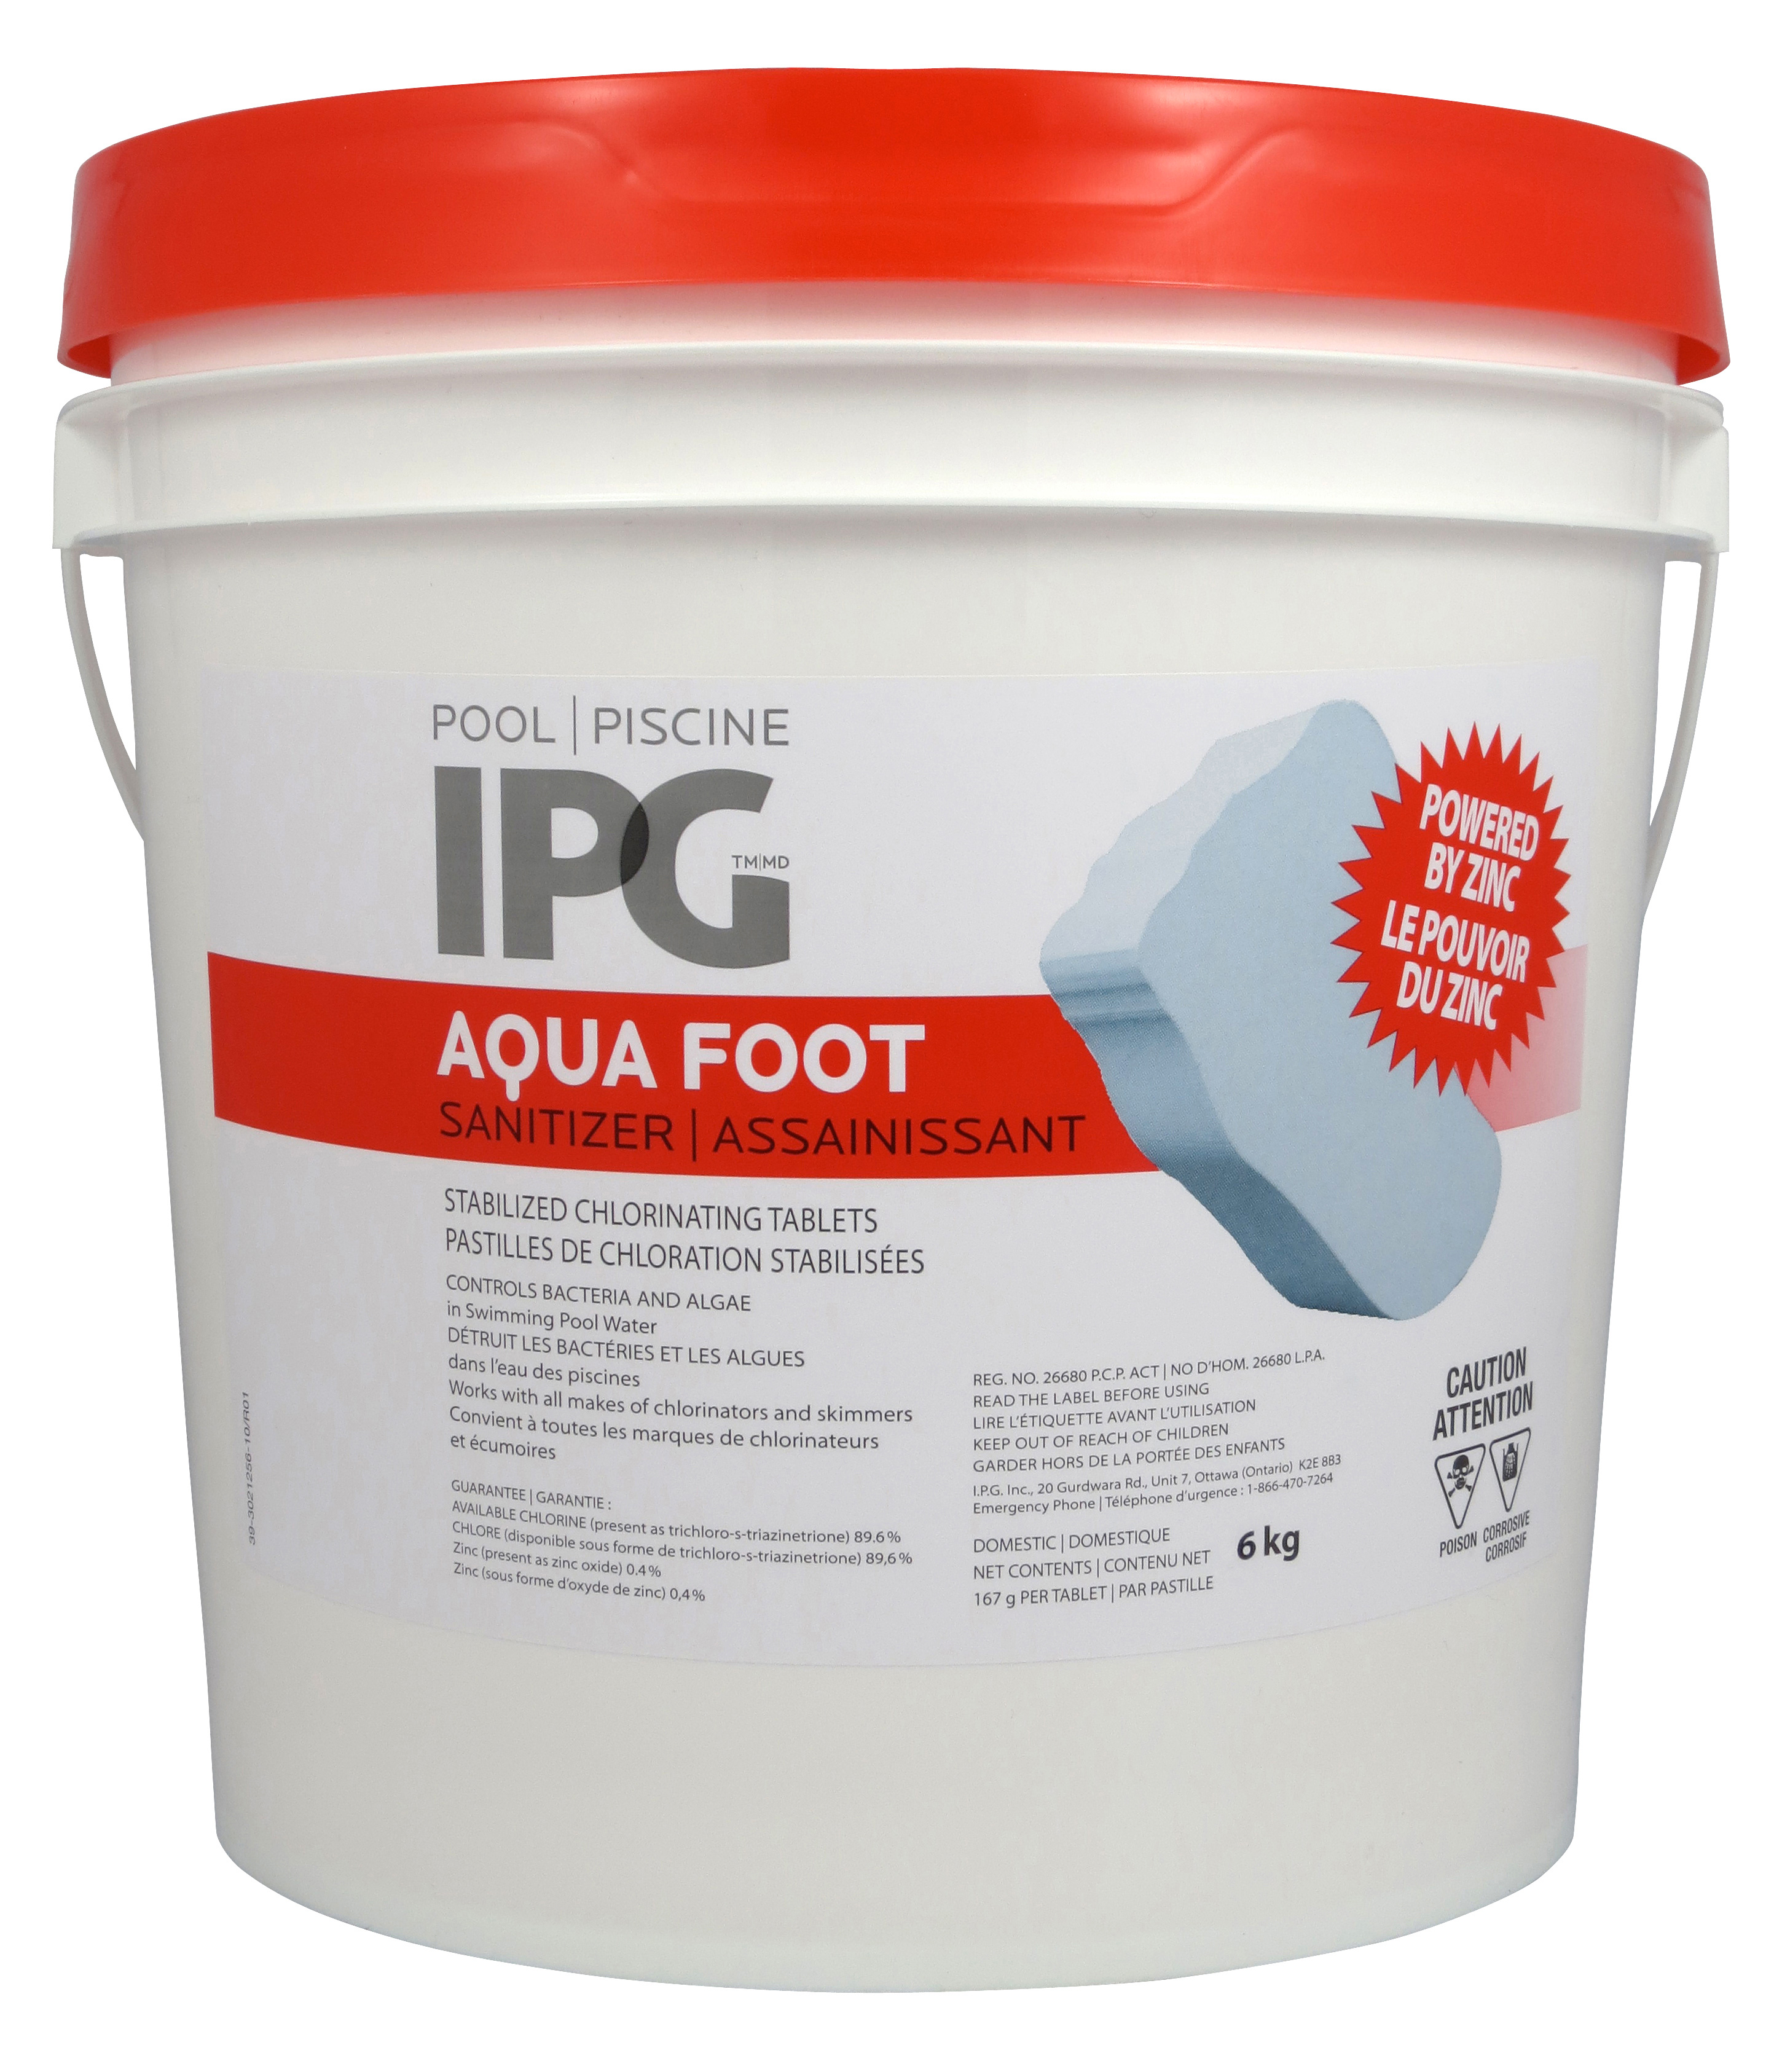 IPG Aqua Foot stabilizing chlorinated tablets